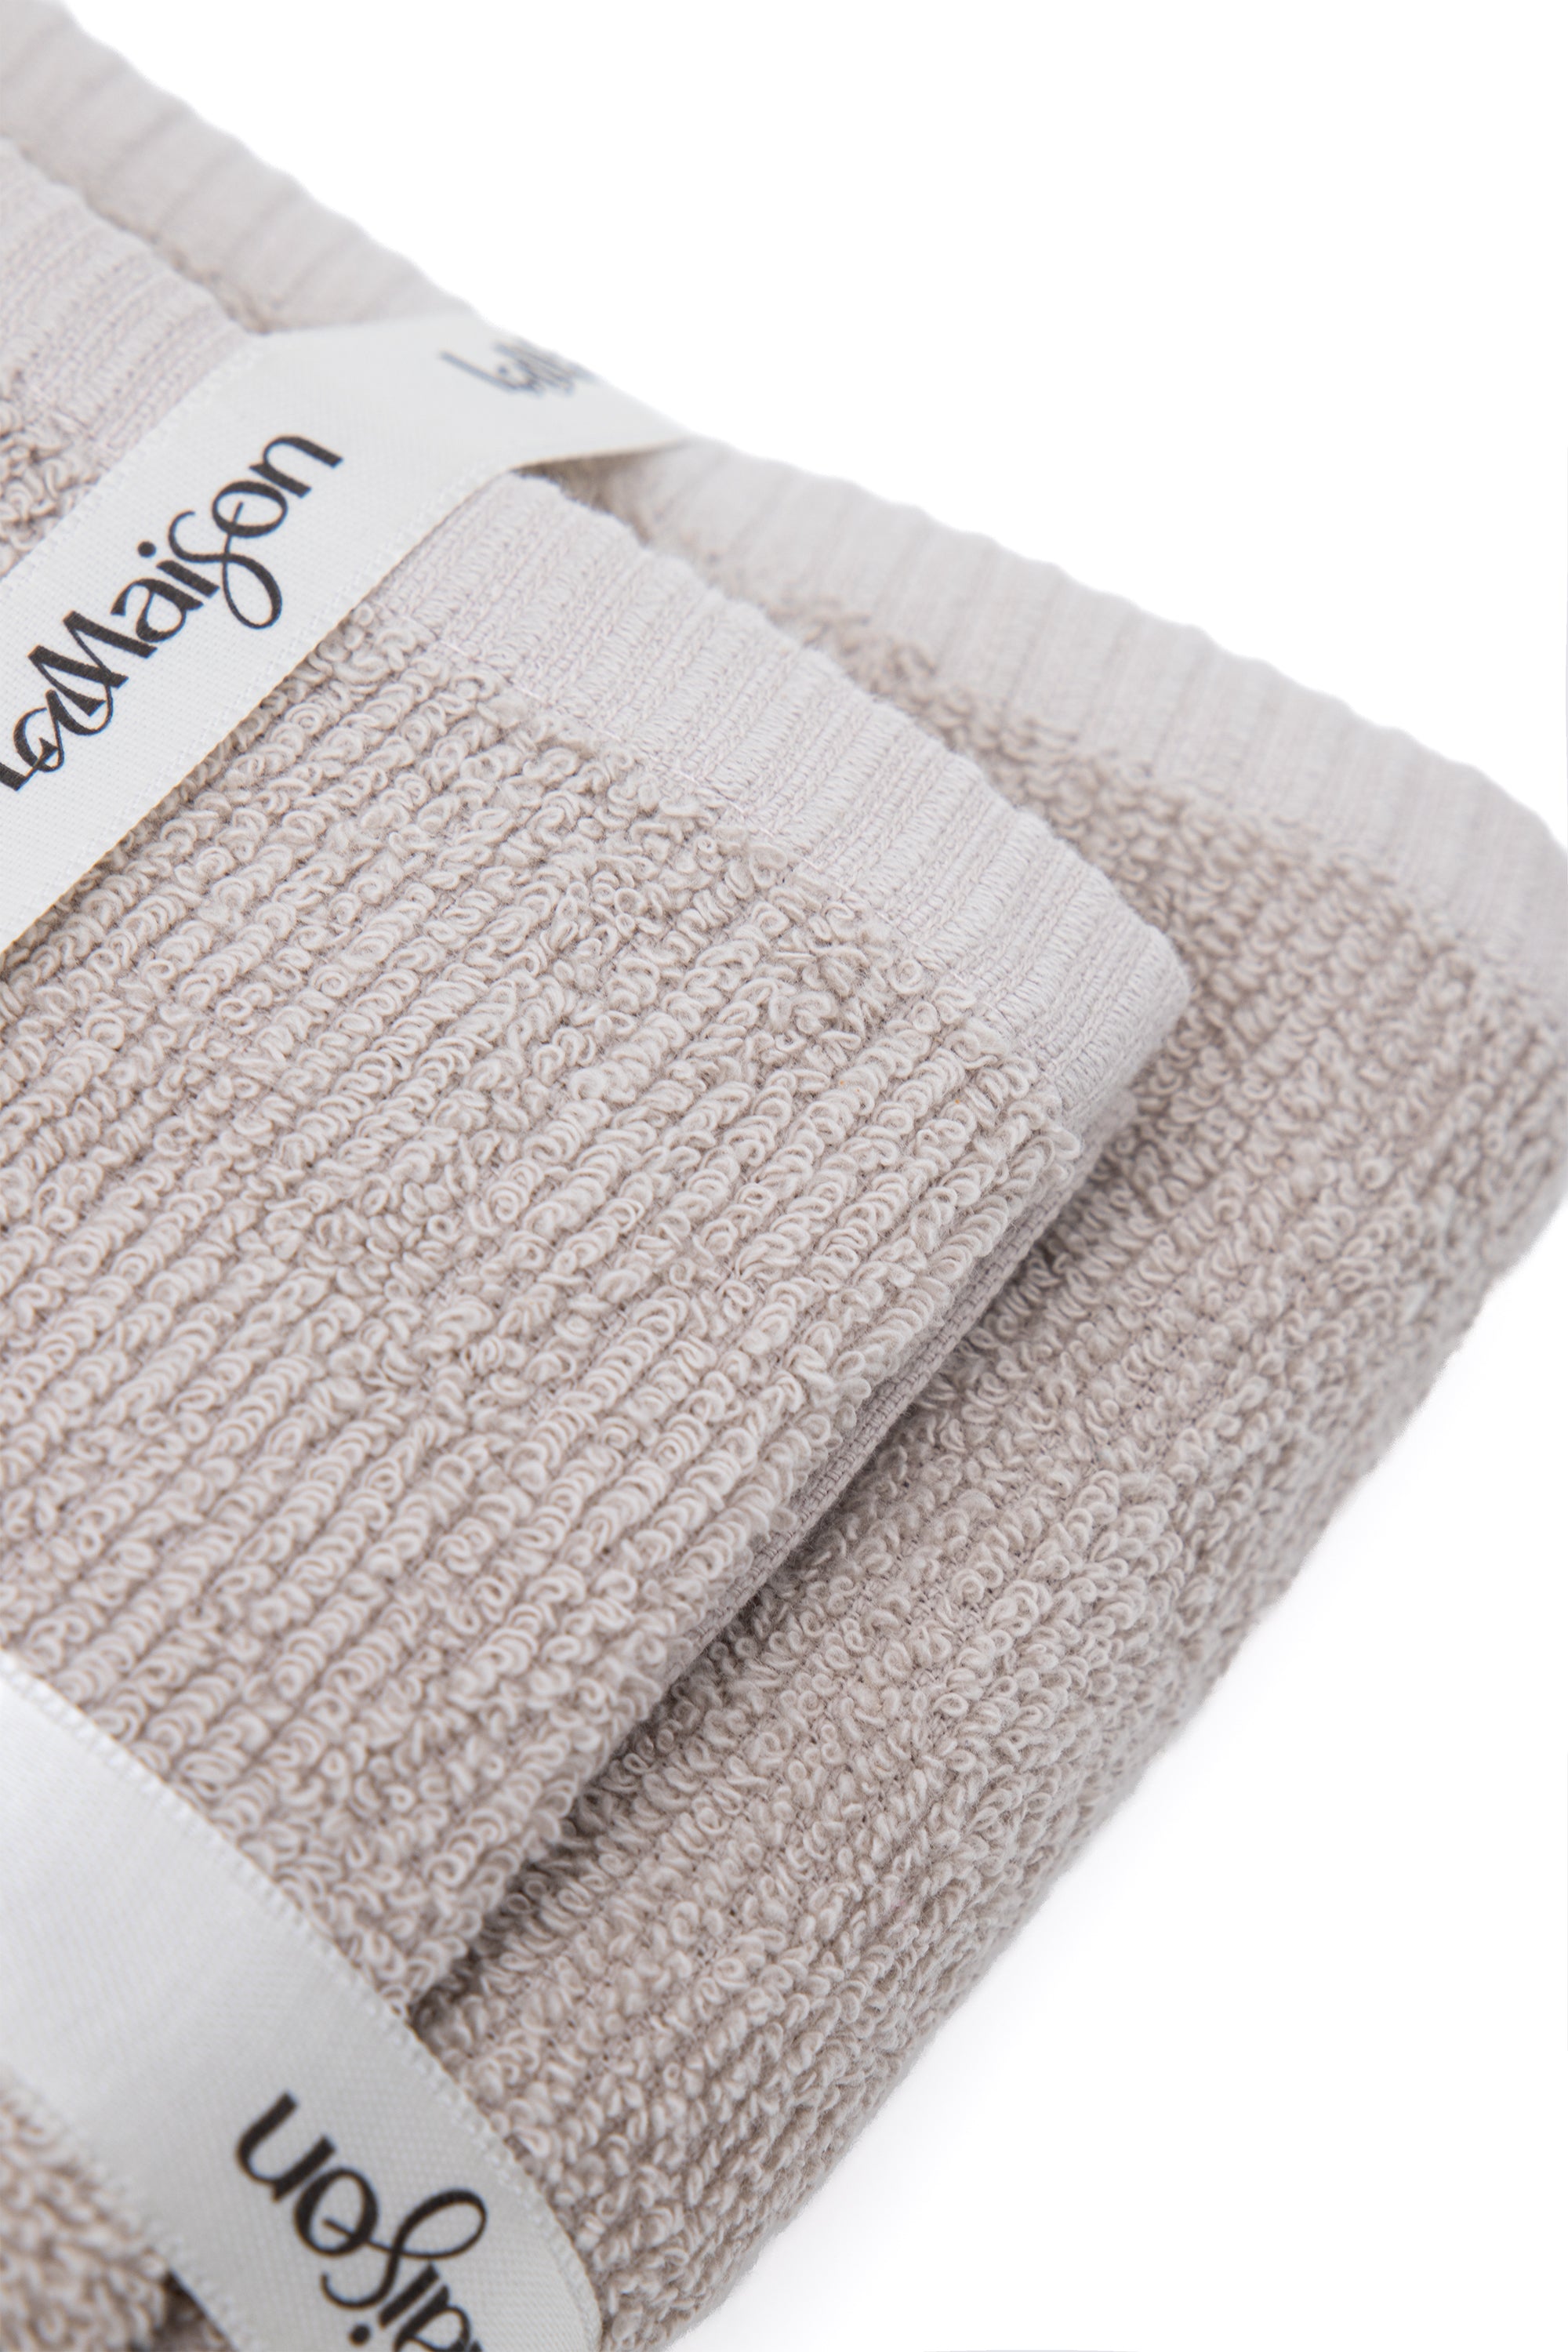 Asciugamano con ospite Beige in cotone 550gsm | In vari disegni